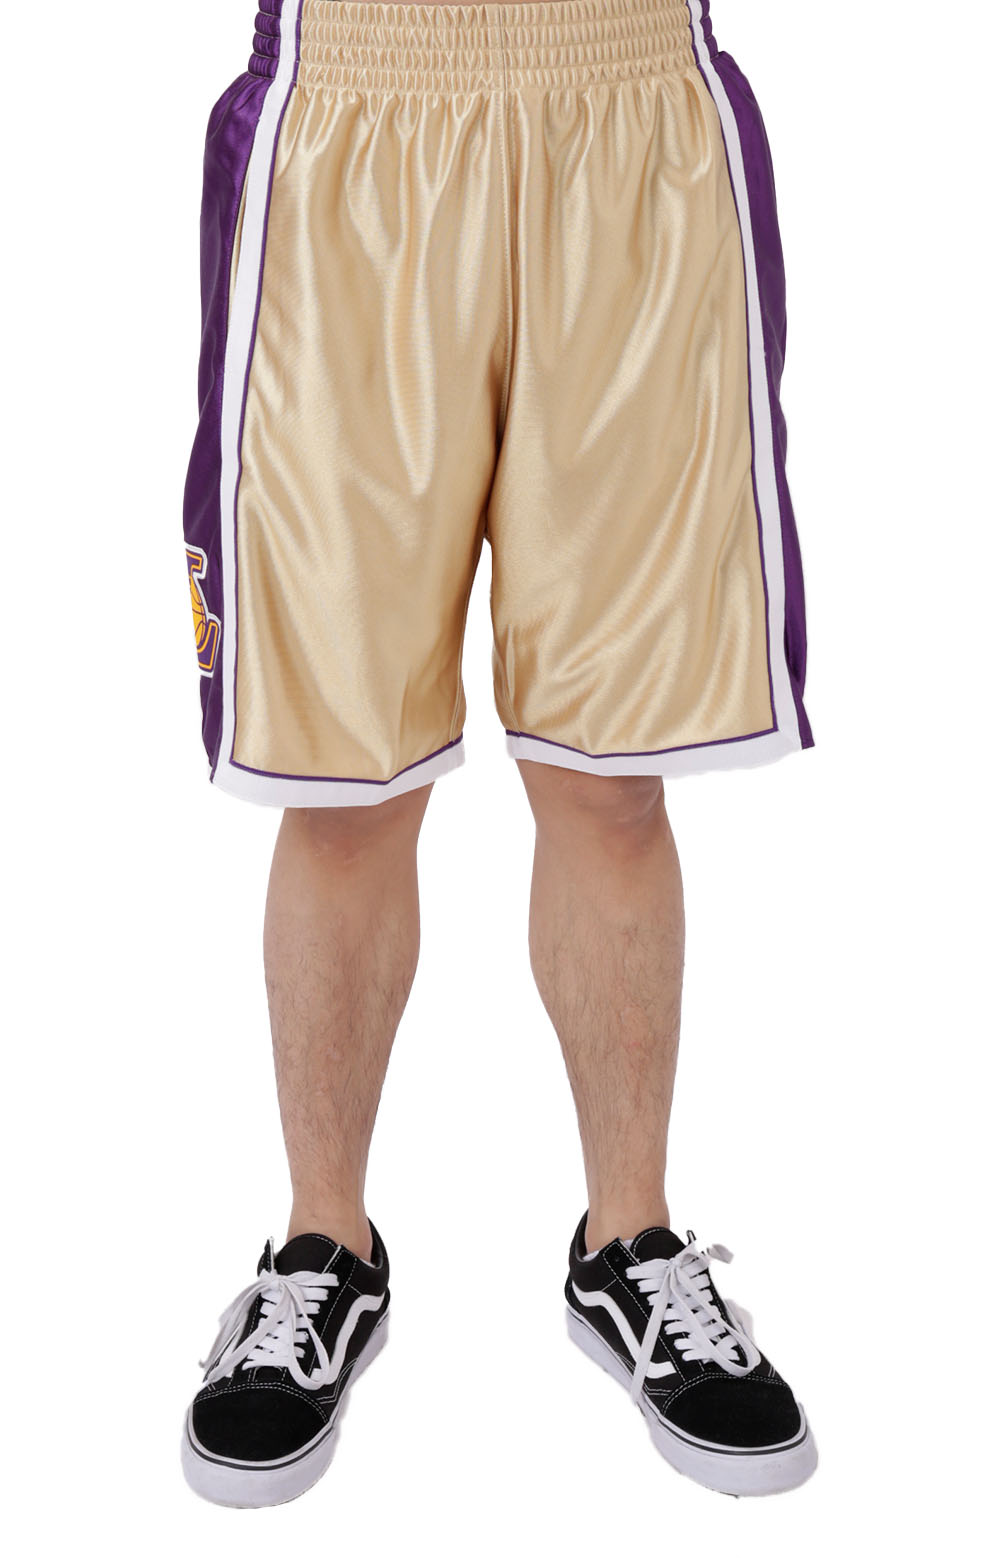 NBA 75th Gold Swingman Shorts - Lakers 2009